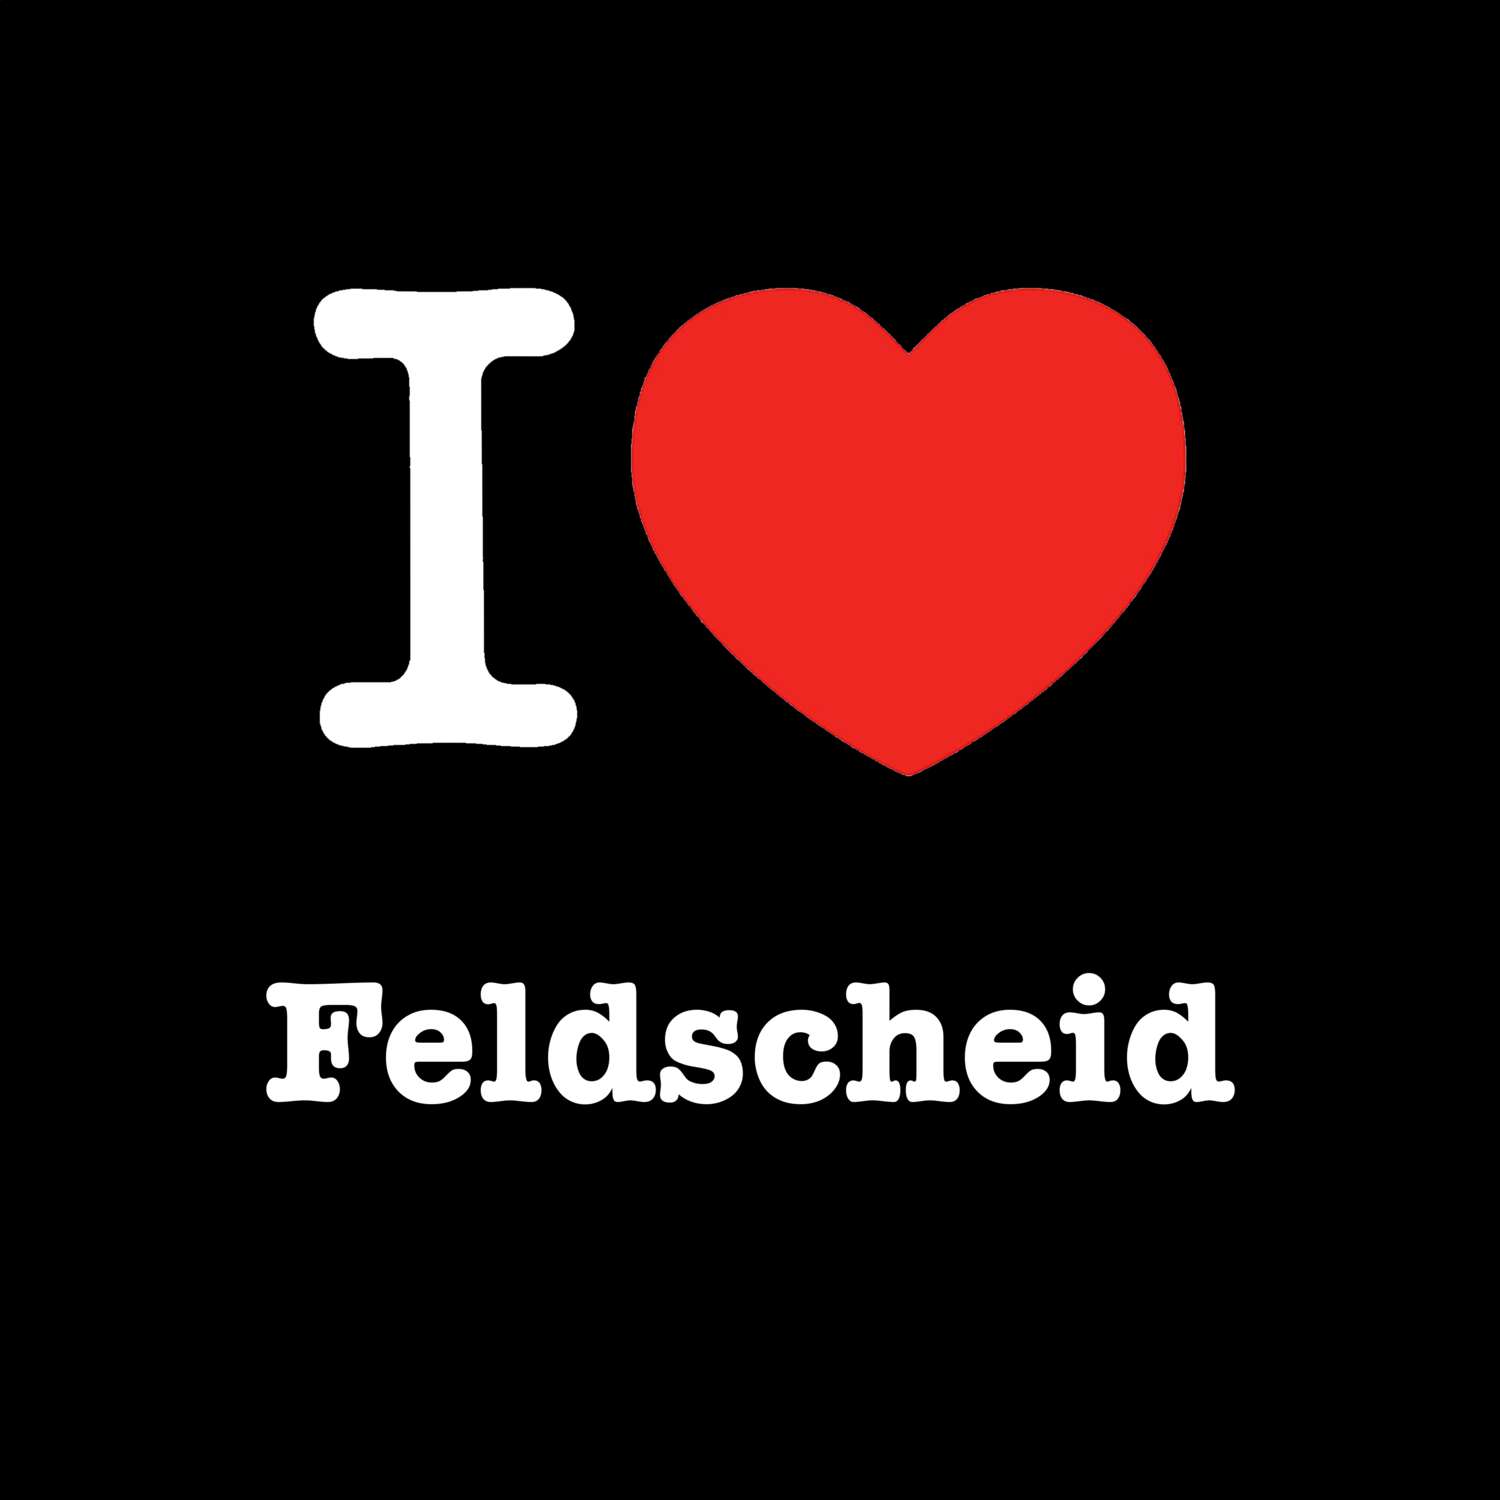 Feldscheid T-Shirt »I love«